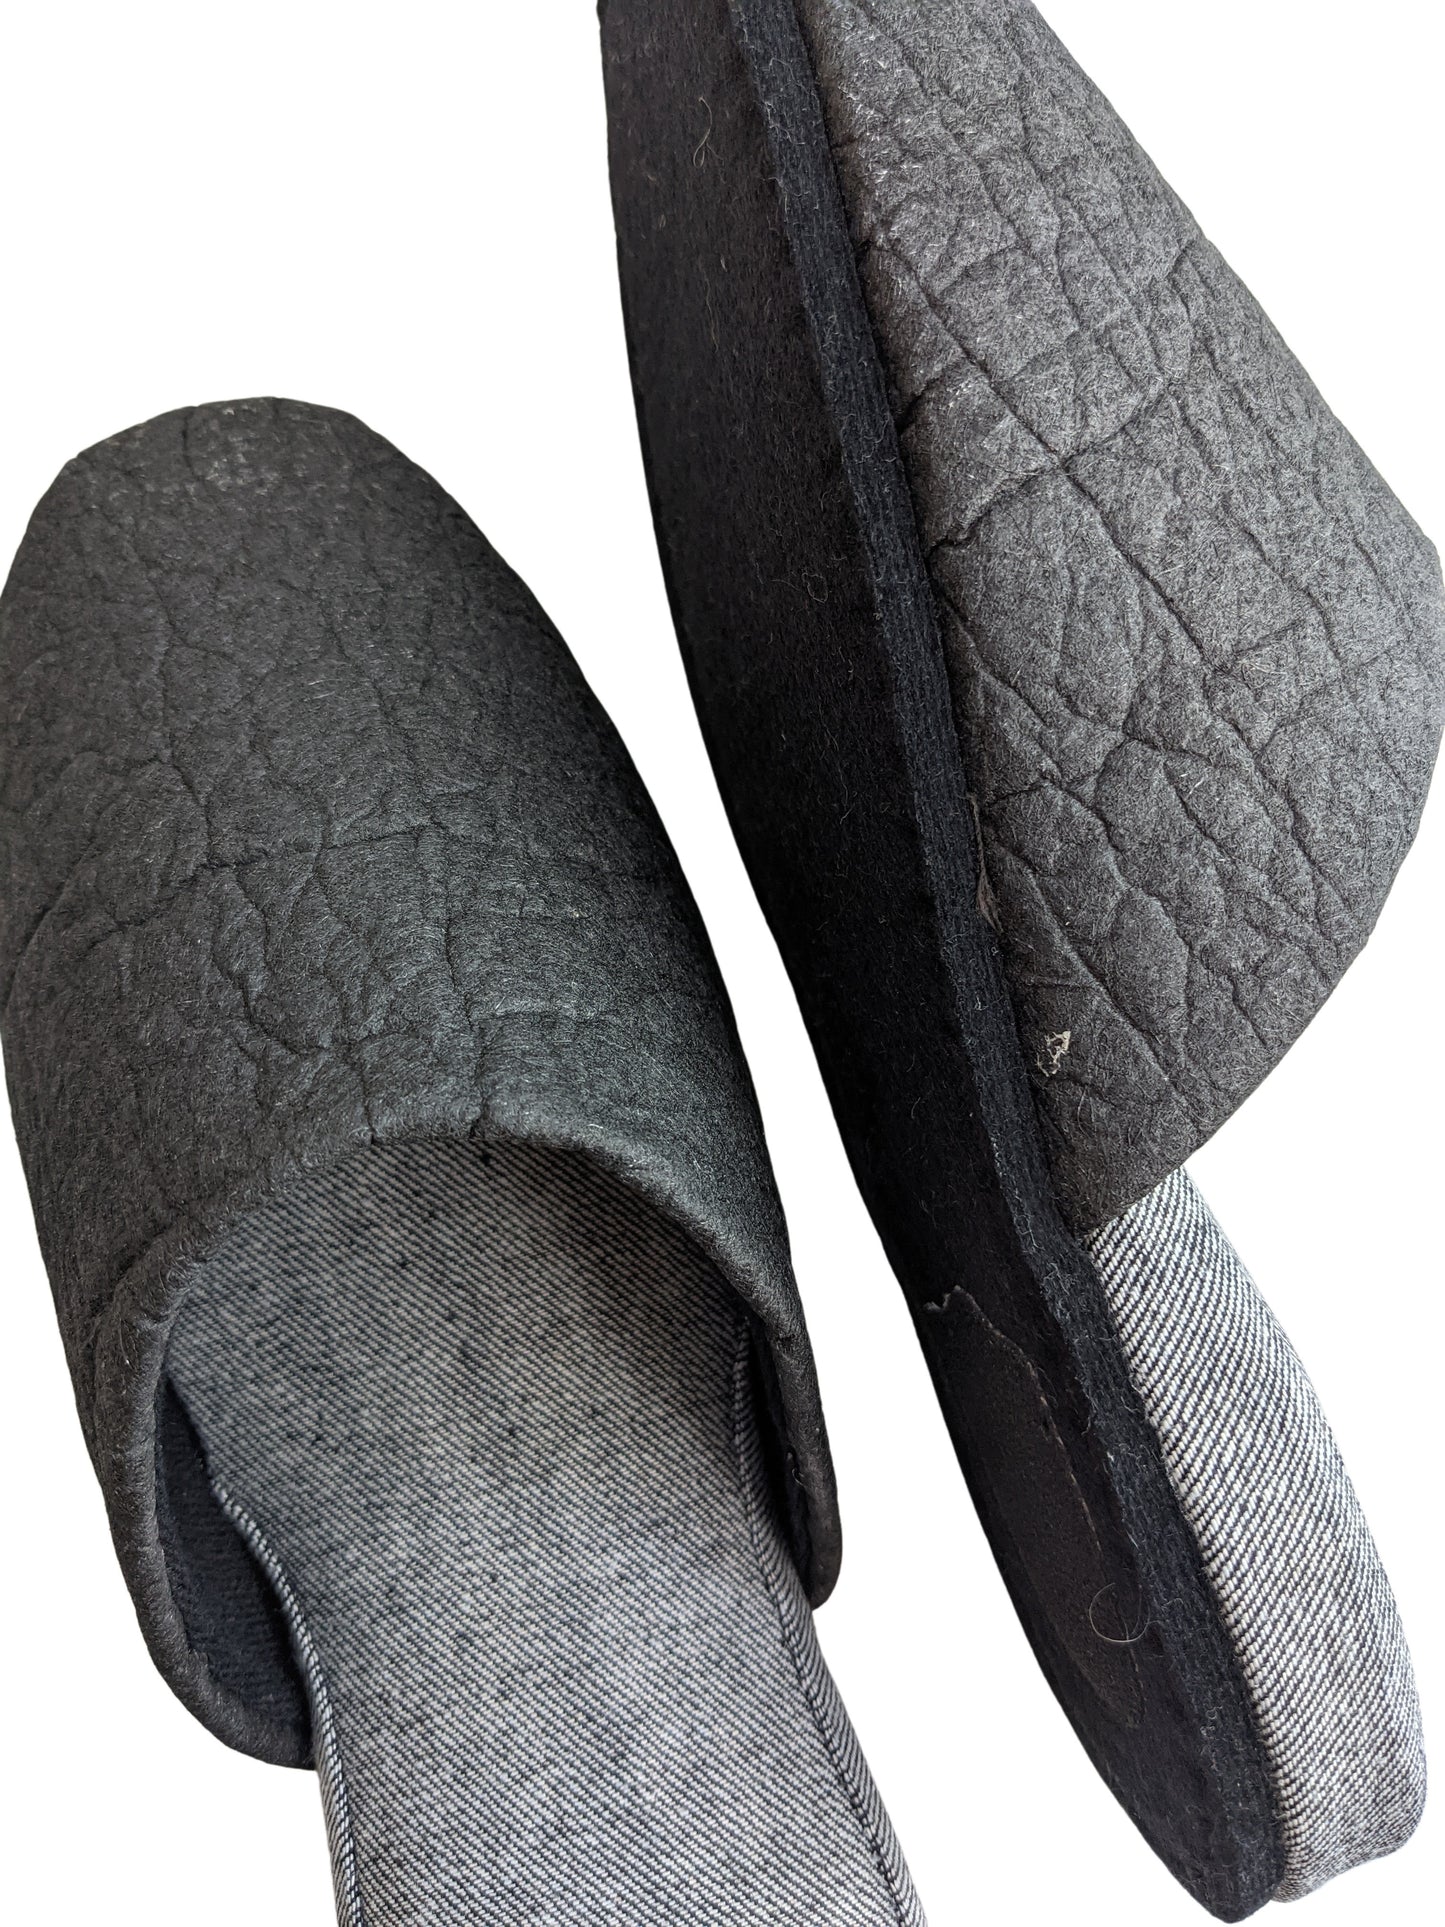 Piñatex®  Heiwa Slipper  Pineapple leaf fibres Denim Hiroshima Slippers Simple sizes [Medium / Large / XL] Charcoal